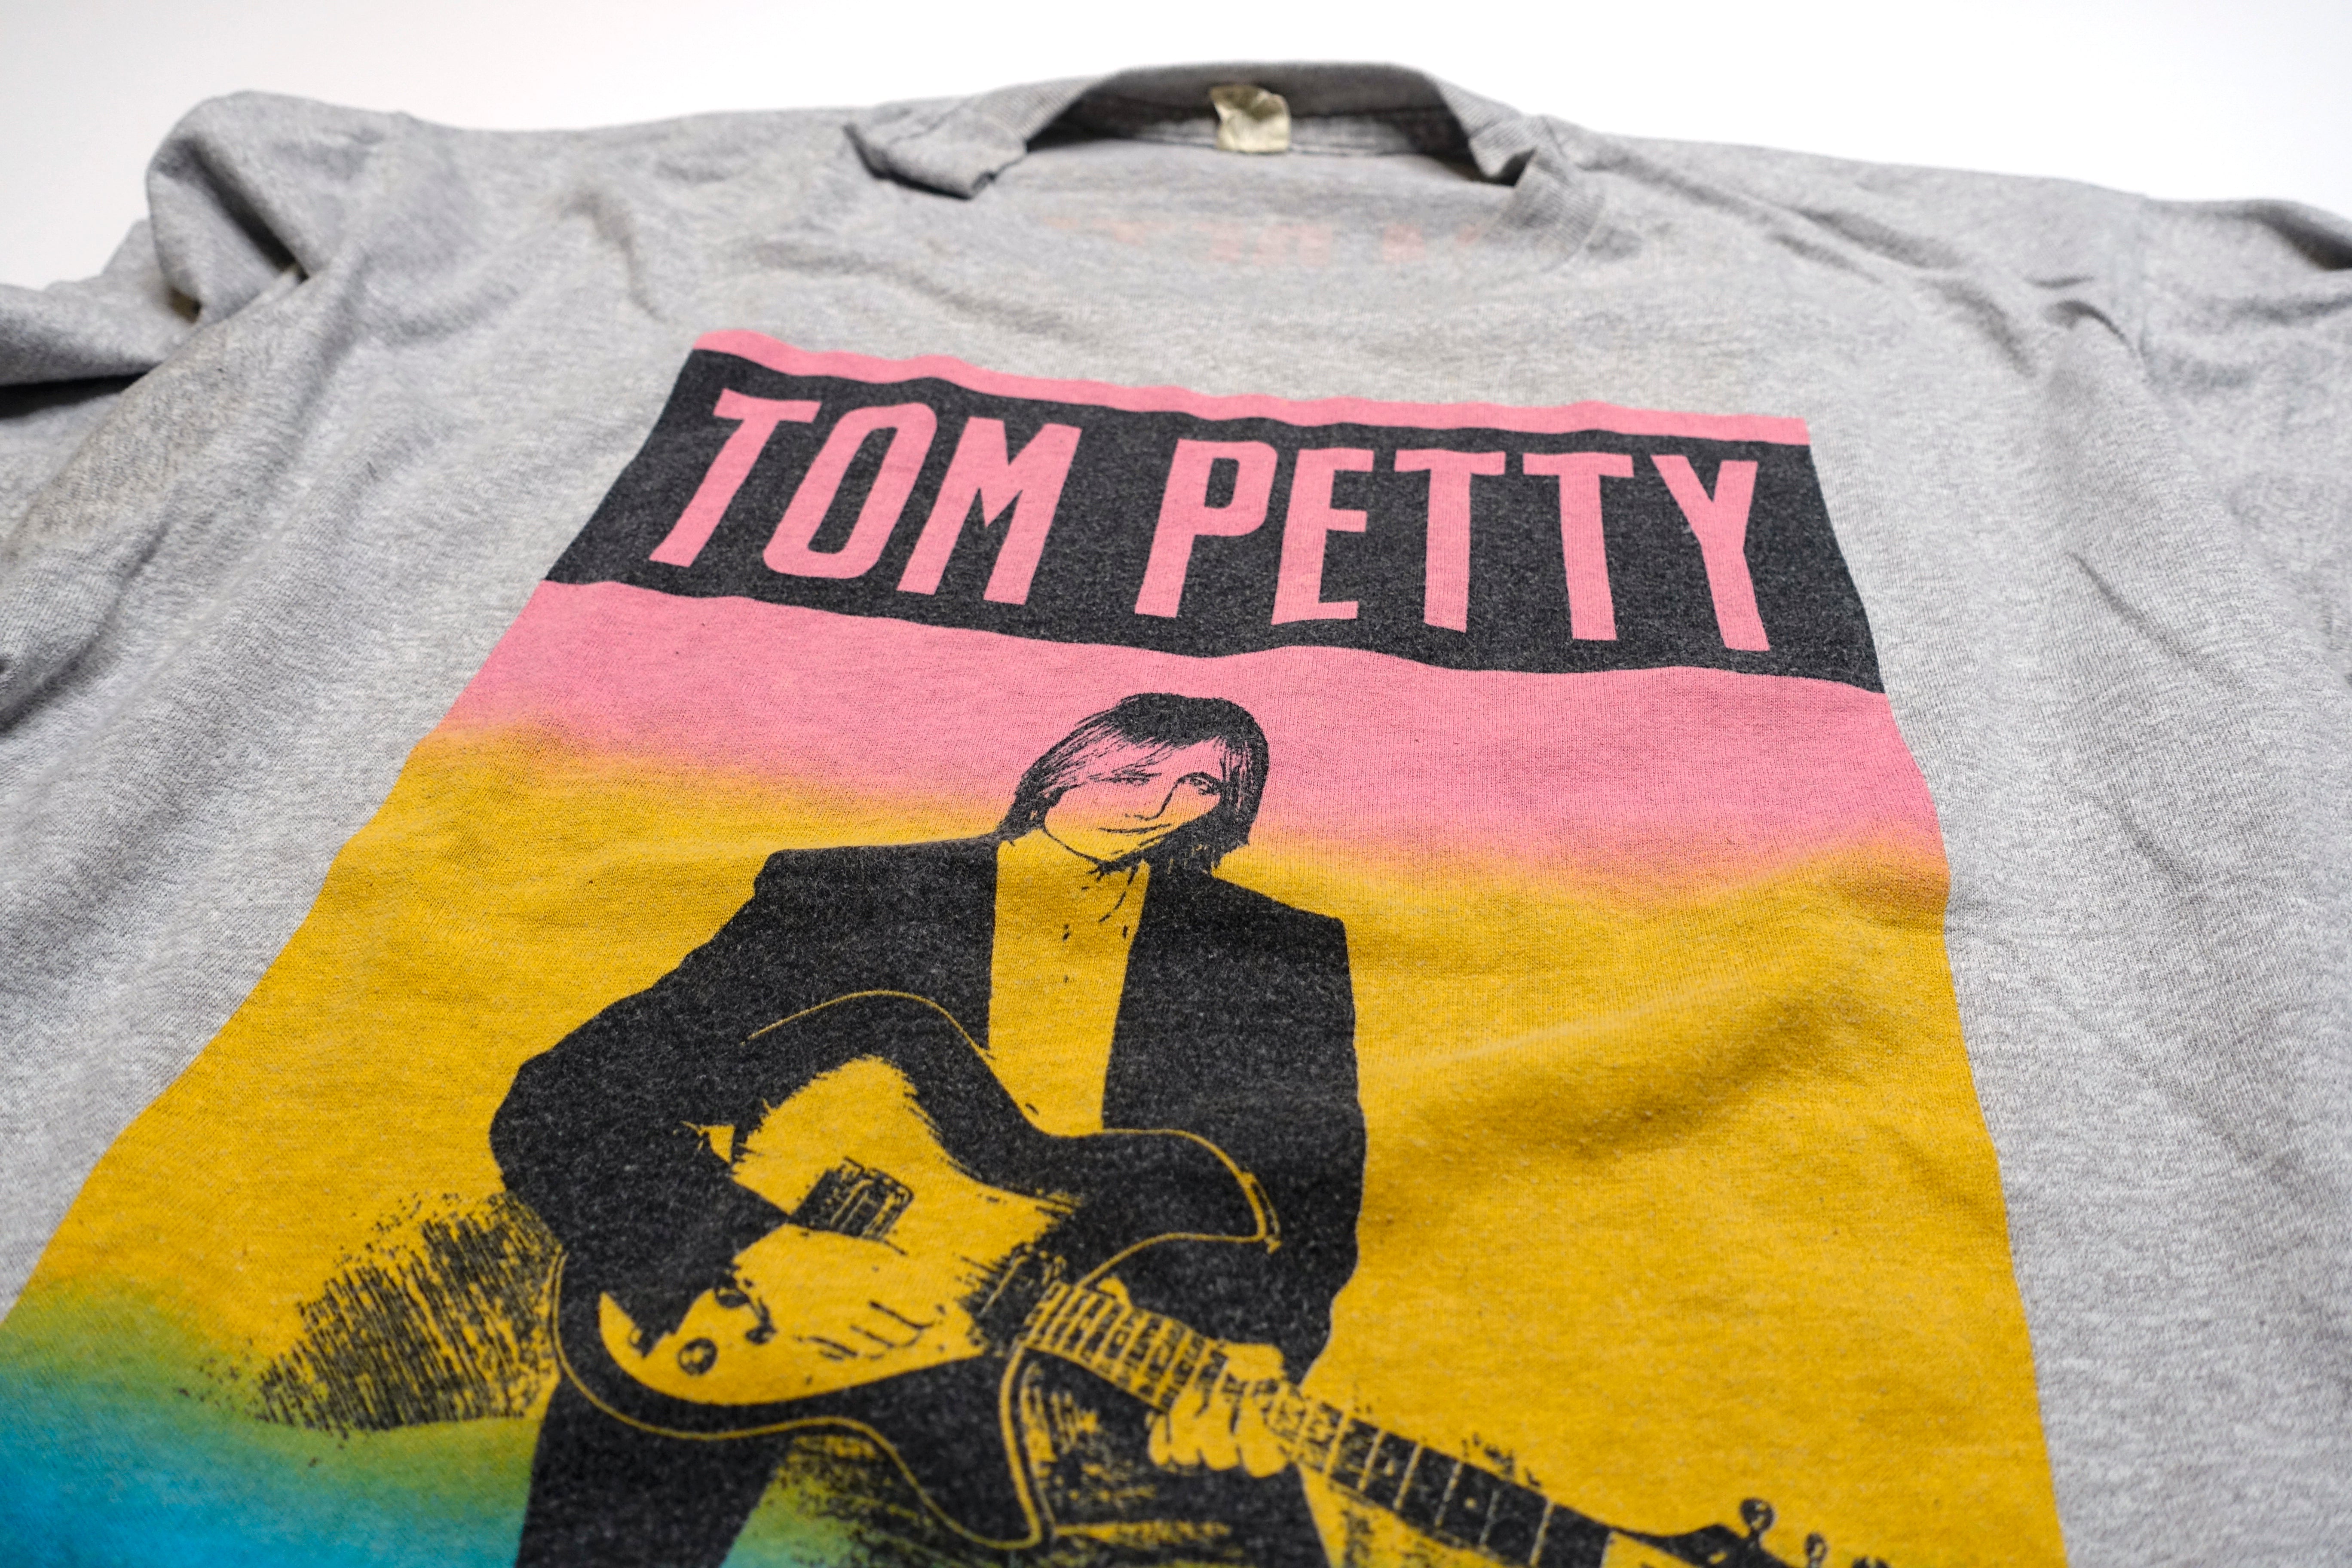 Tom Petty - Full Moon Fever 1990 USA Tour Shirt Size Large